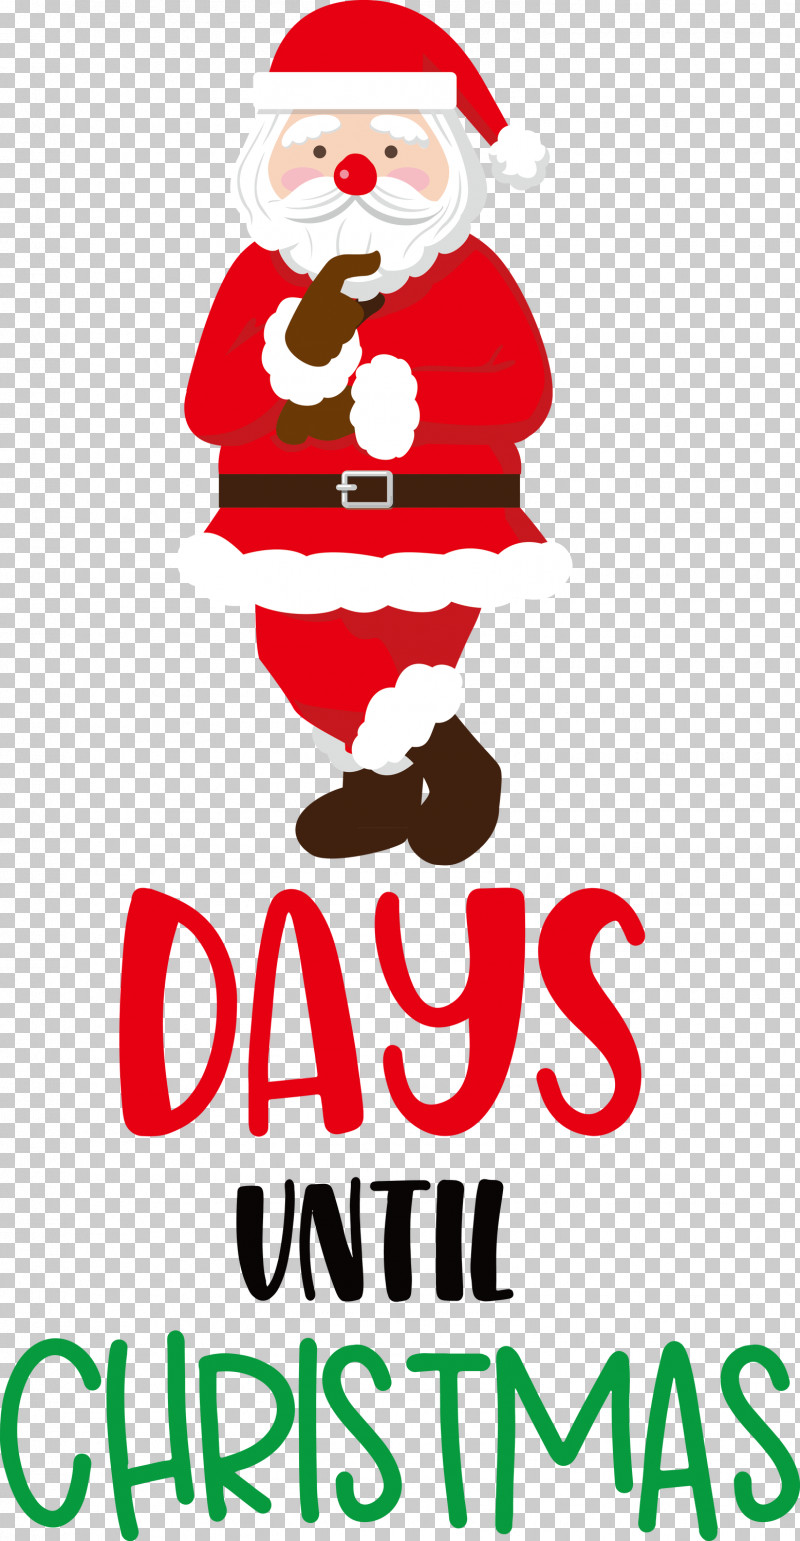 Days Until Christmas Christmas Santa Claus PNG, Clipart, Christmas, Christmas Day, Christmas Ornament, Christmas Ornament M, Christmas Tree Free PNG Download